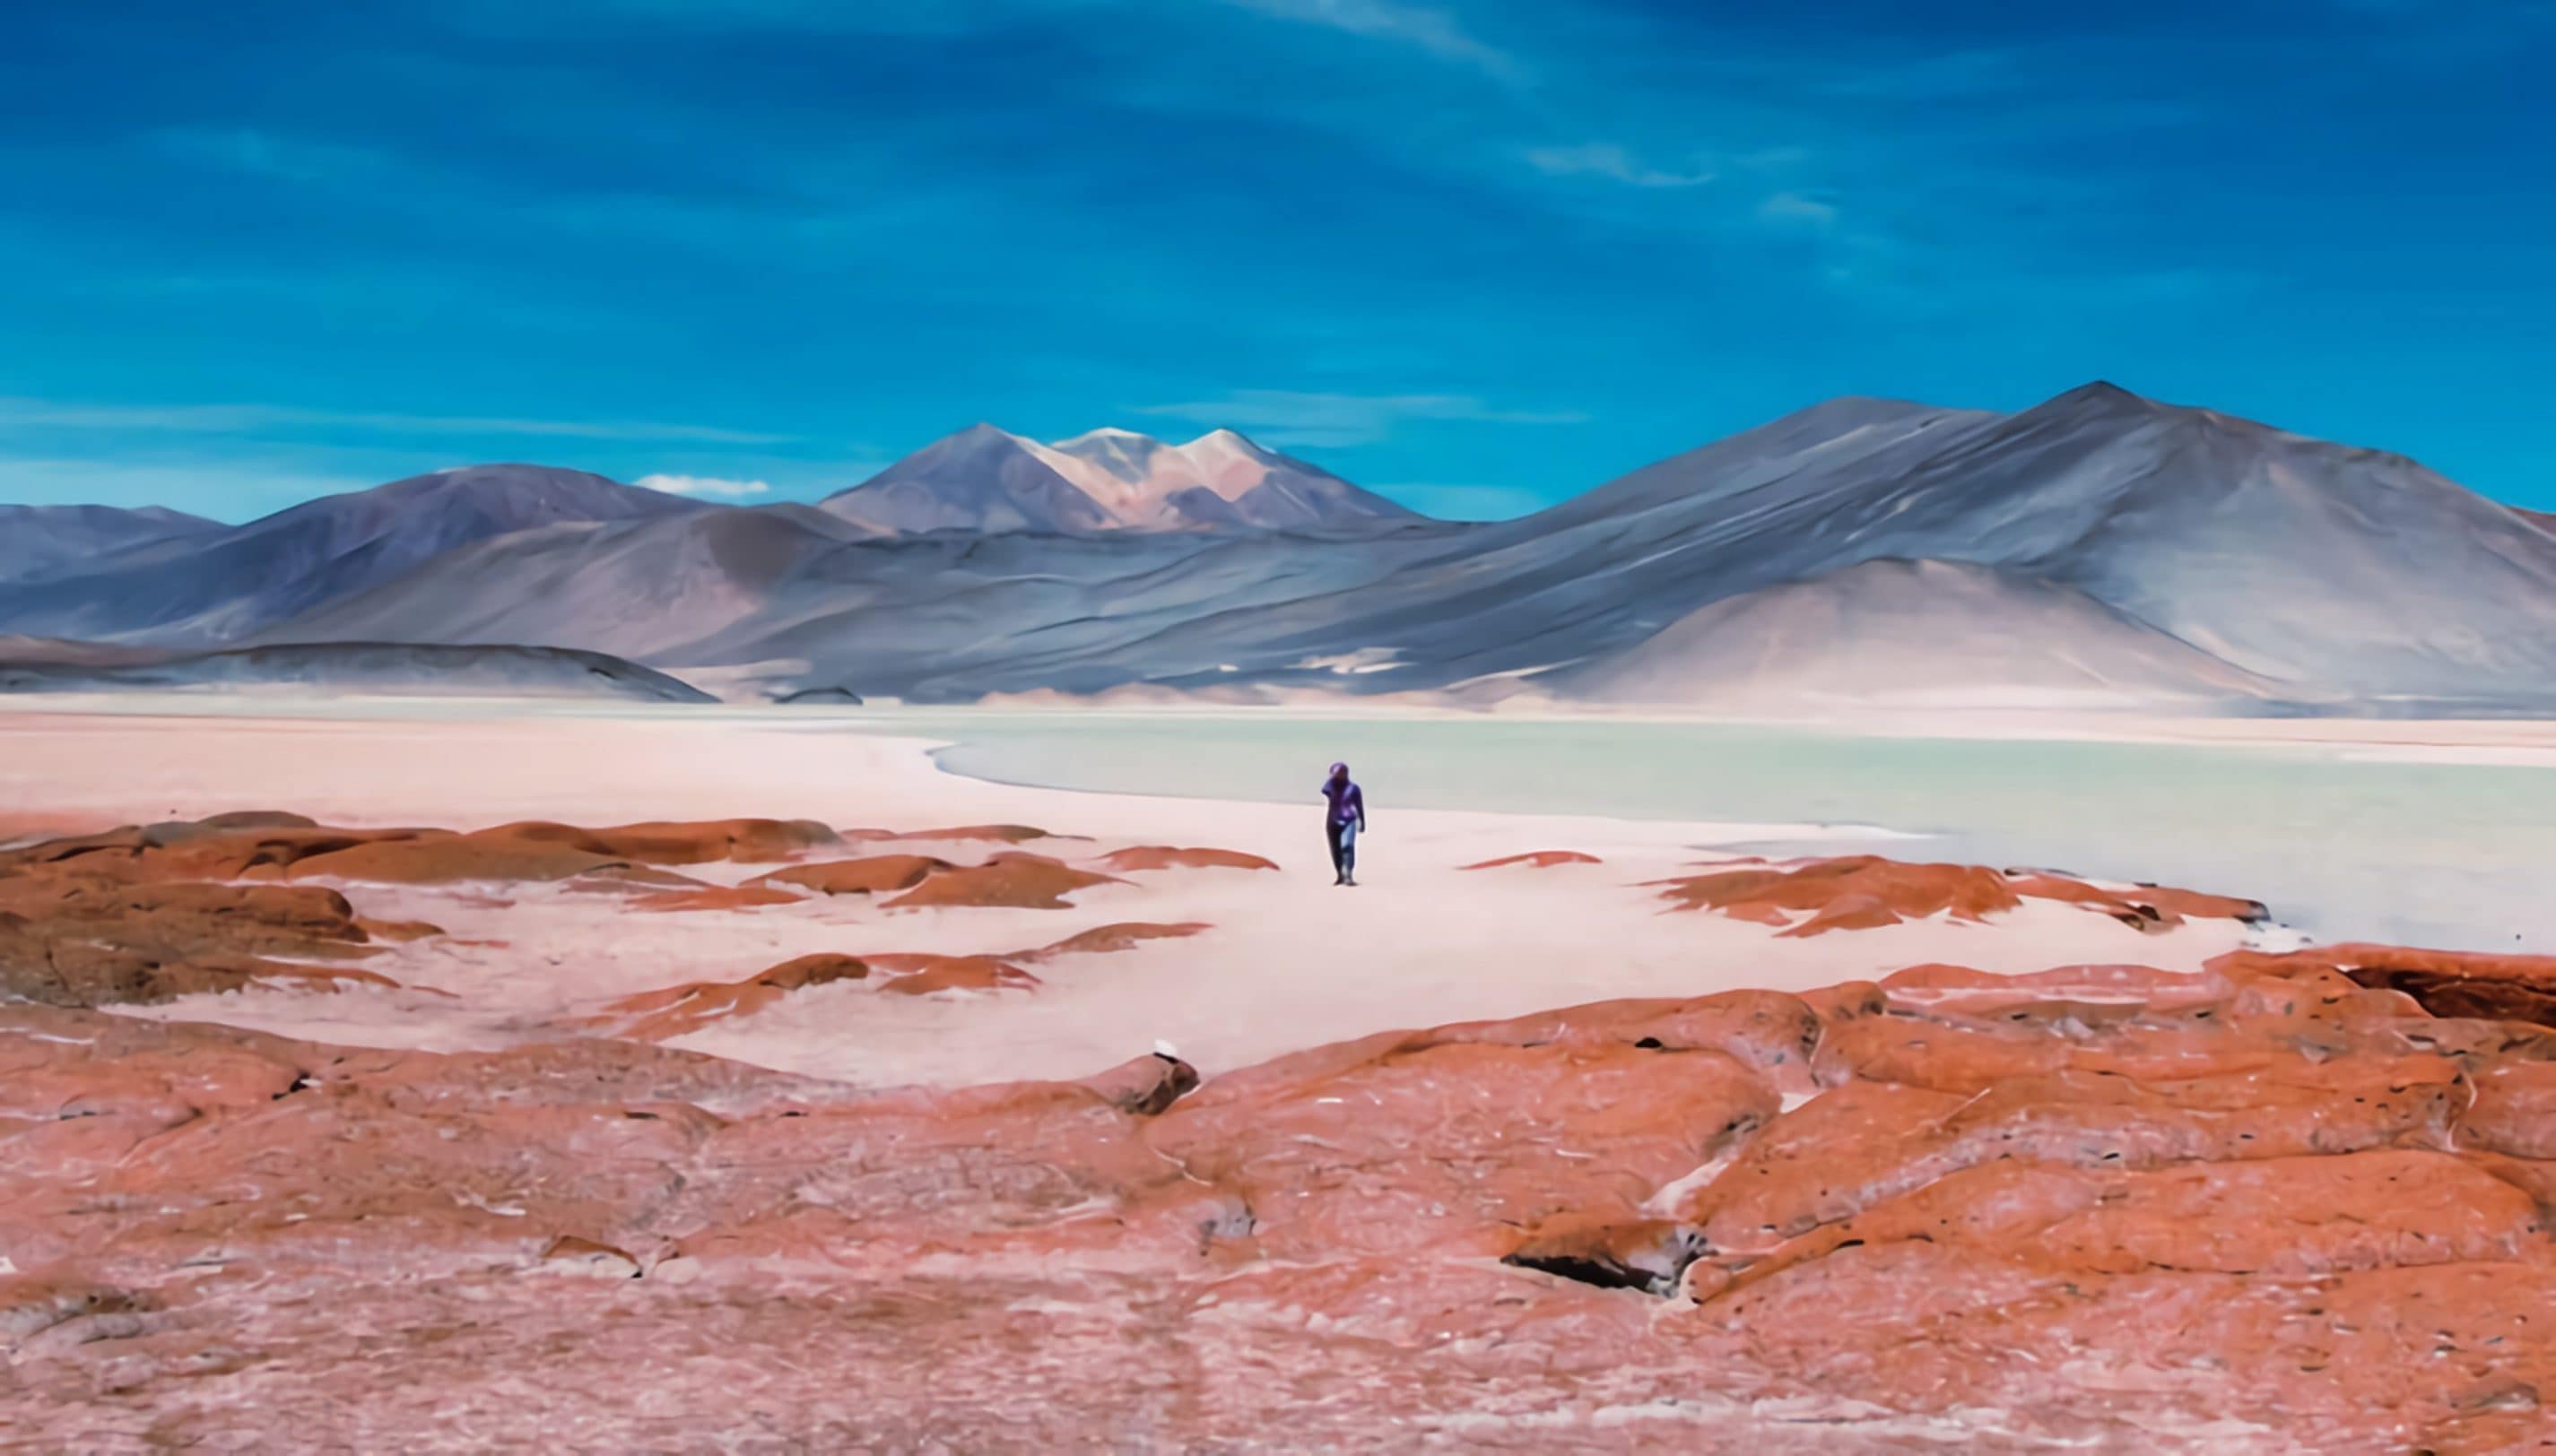 Atacama desert - the driest place on Earth